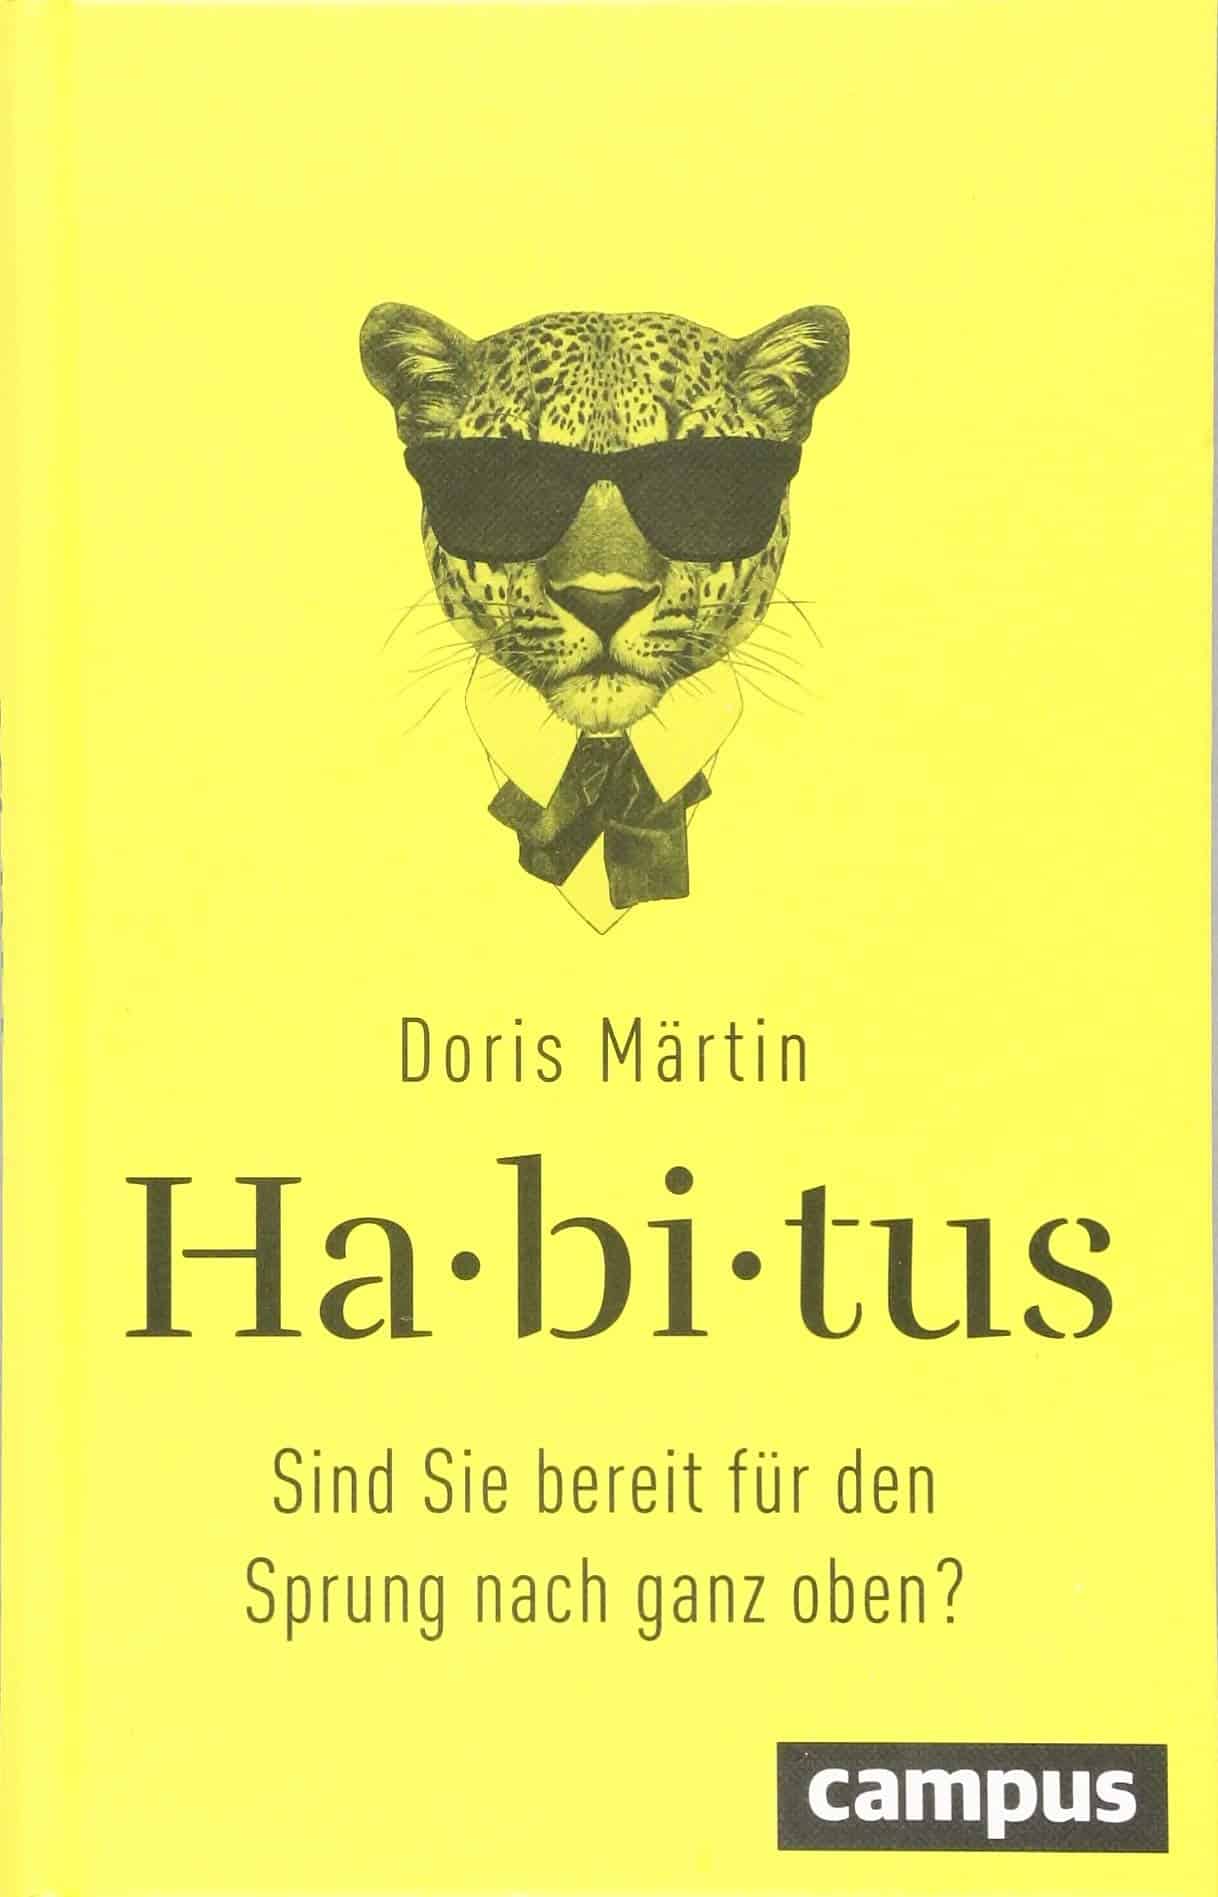 Habitus Doris Märtin